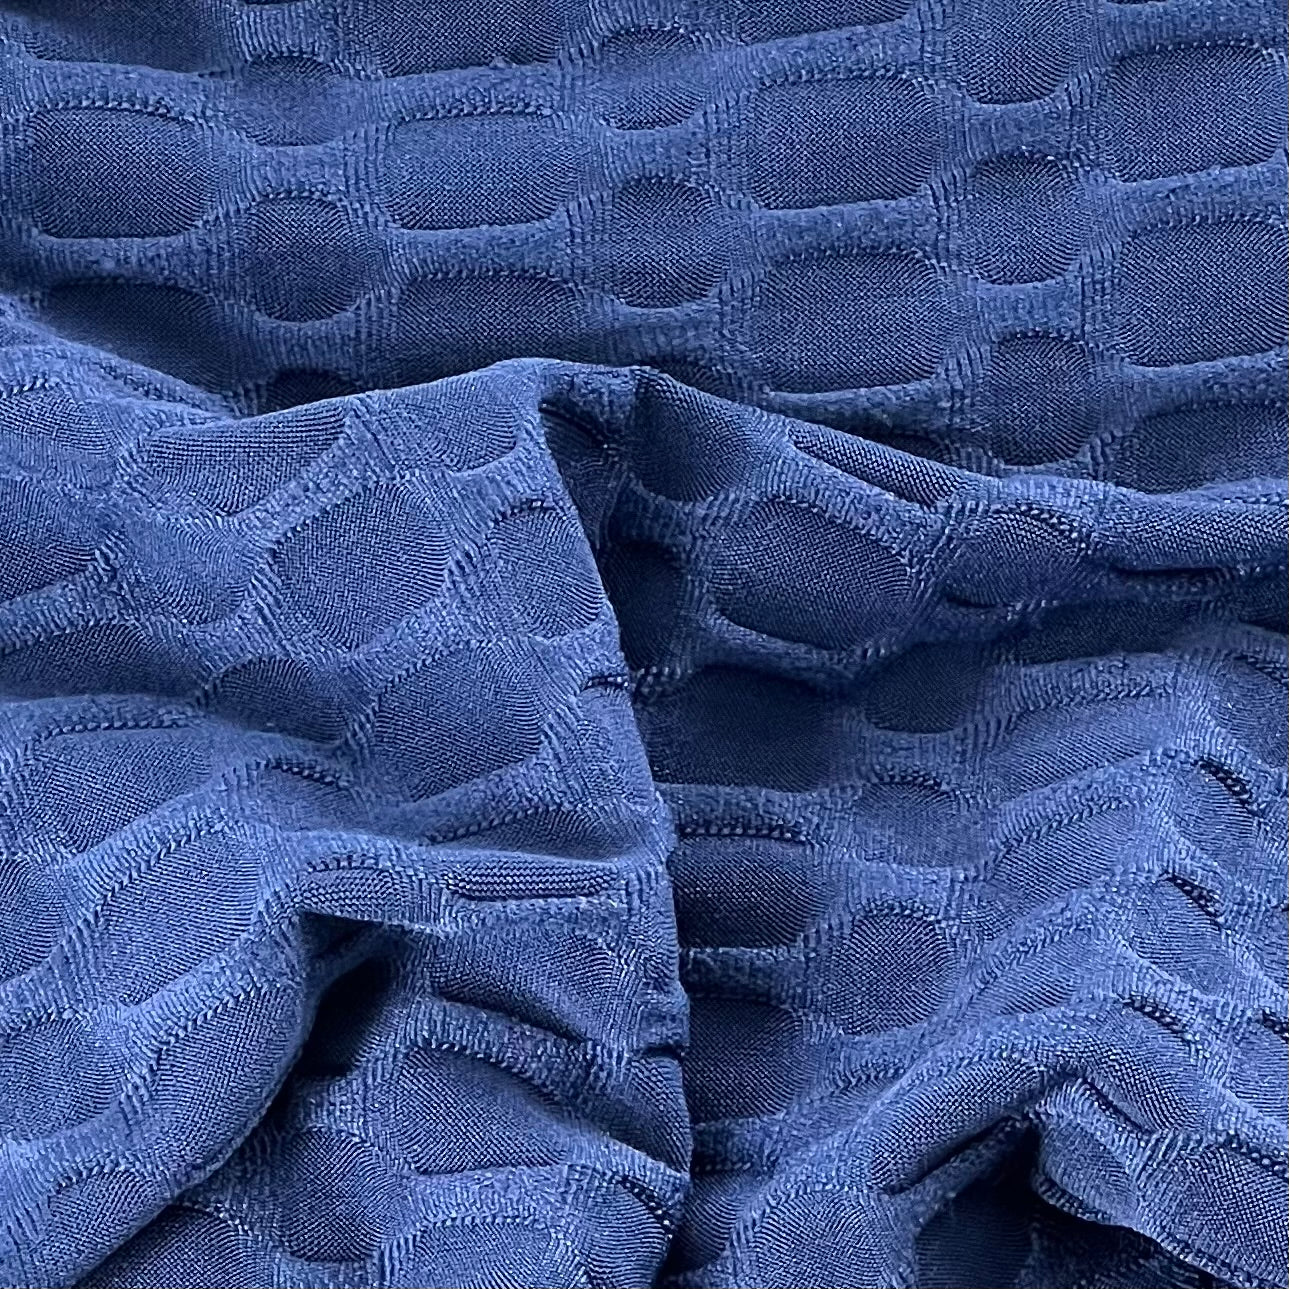 Teal Honeycomb #U5 220 Gram 4-Way Stretch Knit Fabric #7013A